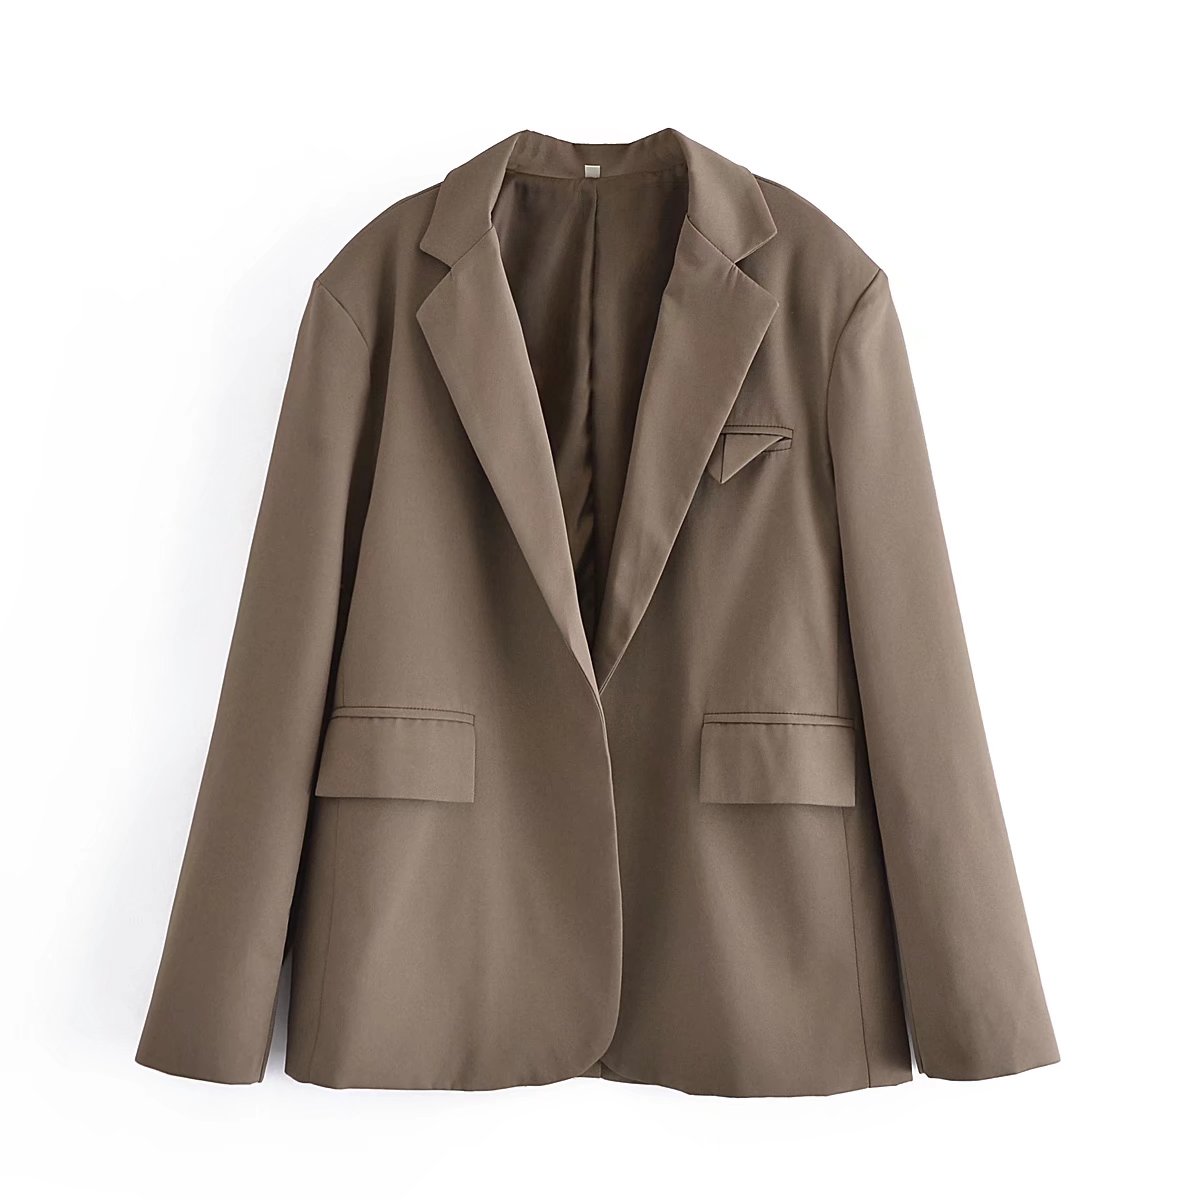 Chicdear Office Wear Single Button Blazer Coat Women Fashion Vintage Brown Long Sleeve Pockets Female Outerwear Autumn